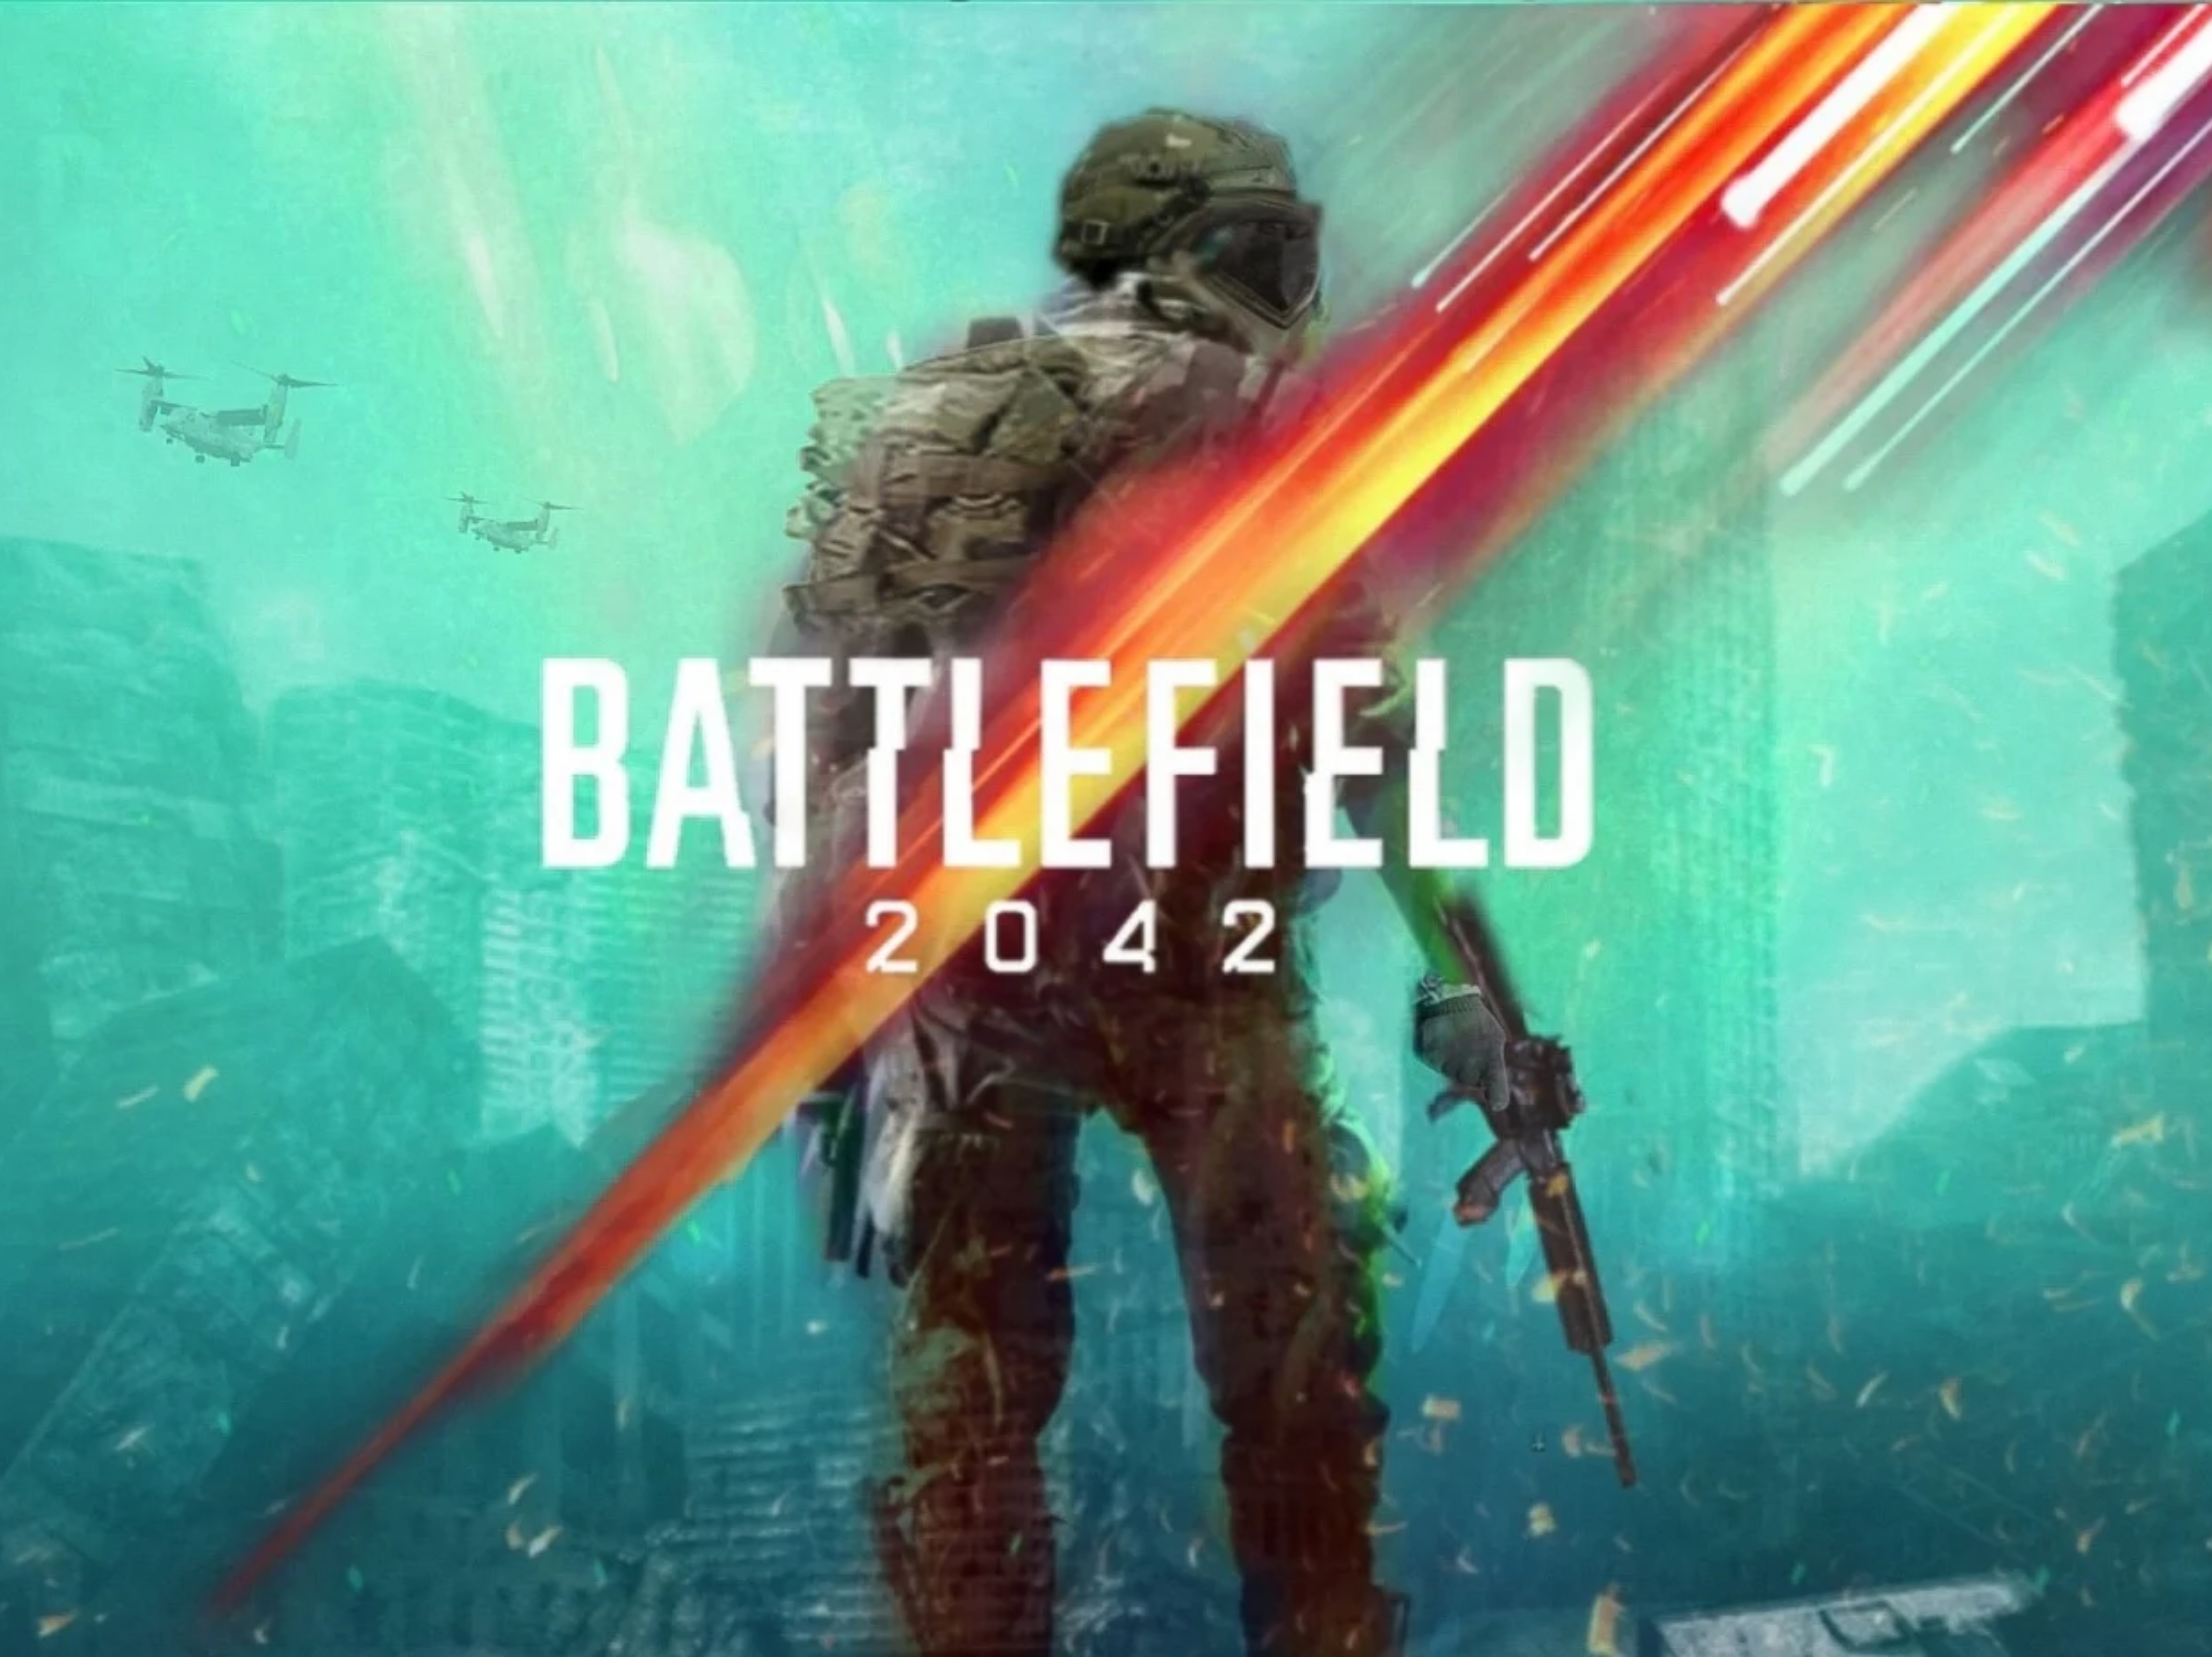 Watch the Battlefield 2042 trailer here